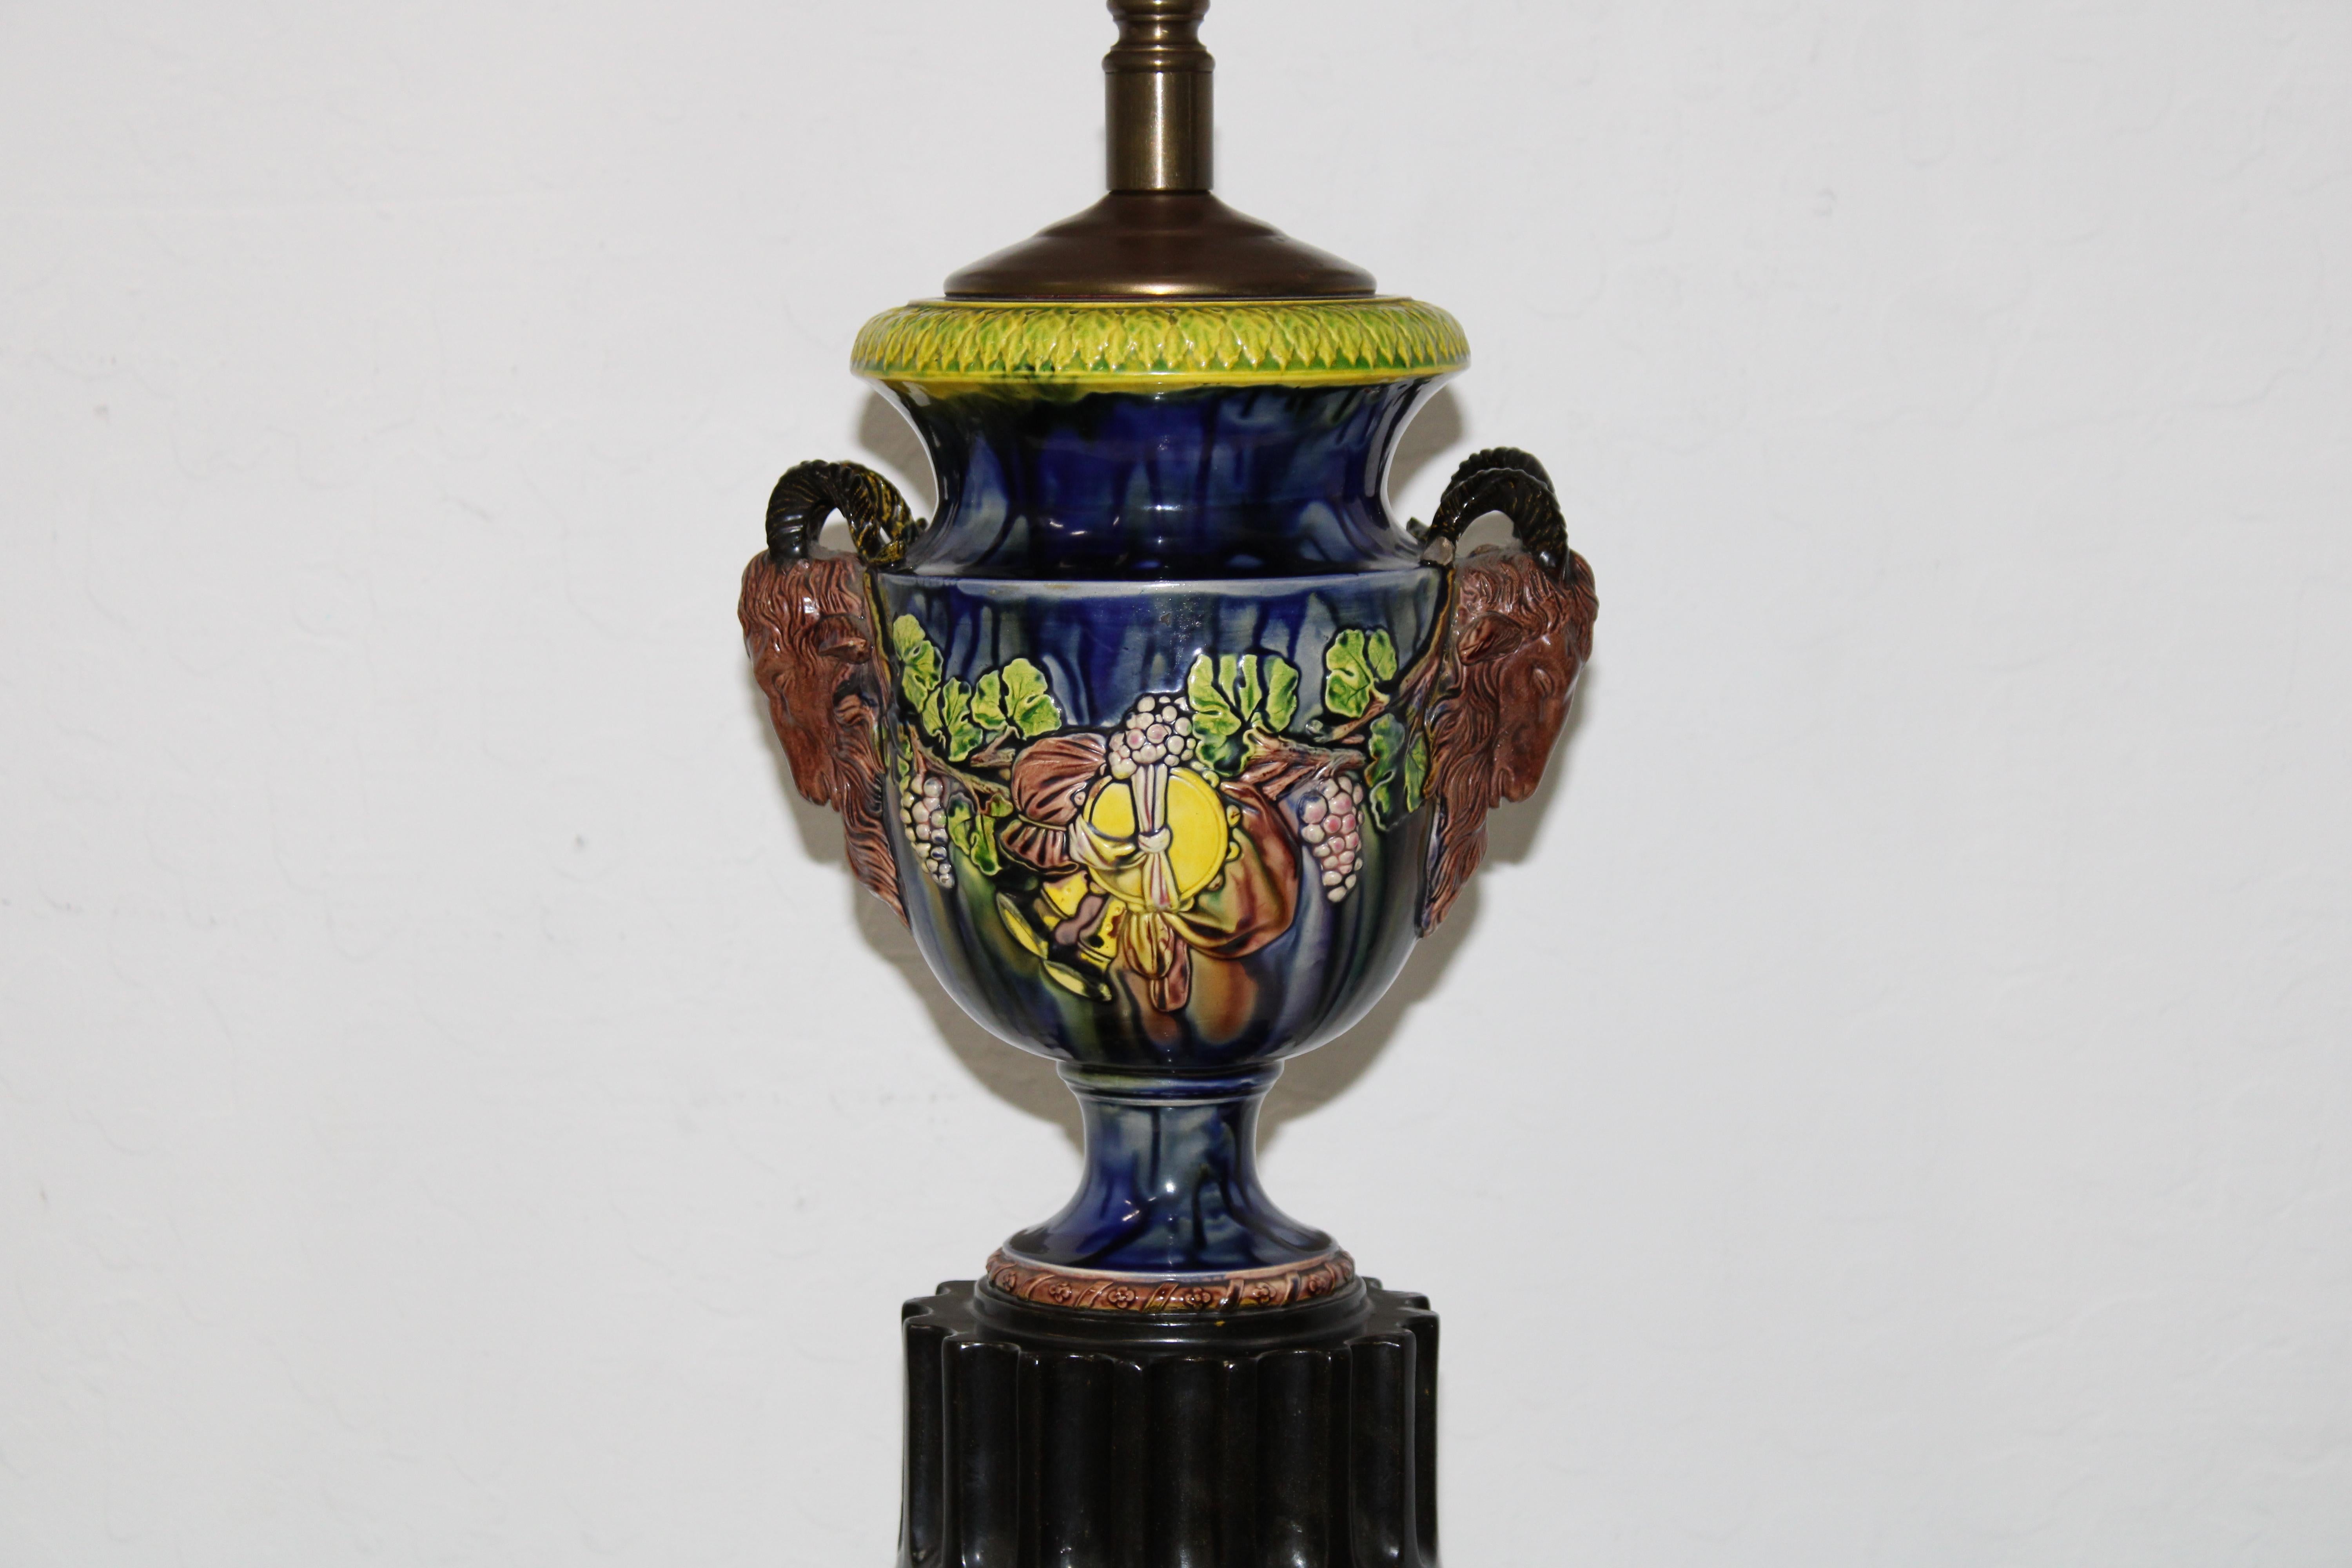 C. Ende 19. Jahrhundert - Anfang 20. Jahrhundert.

J. W. Trushell & CO. Aus Metall gefertigte Lampe.